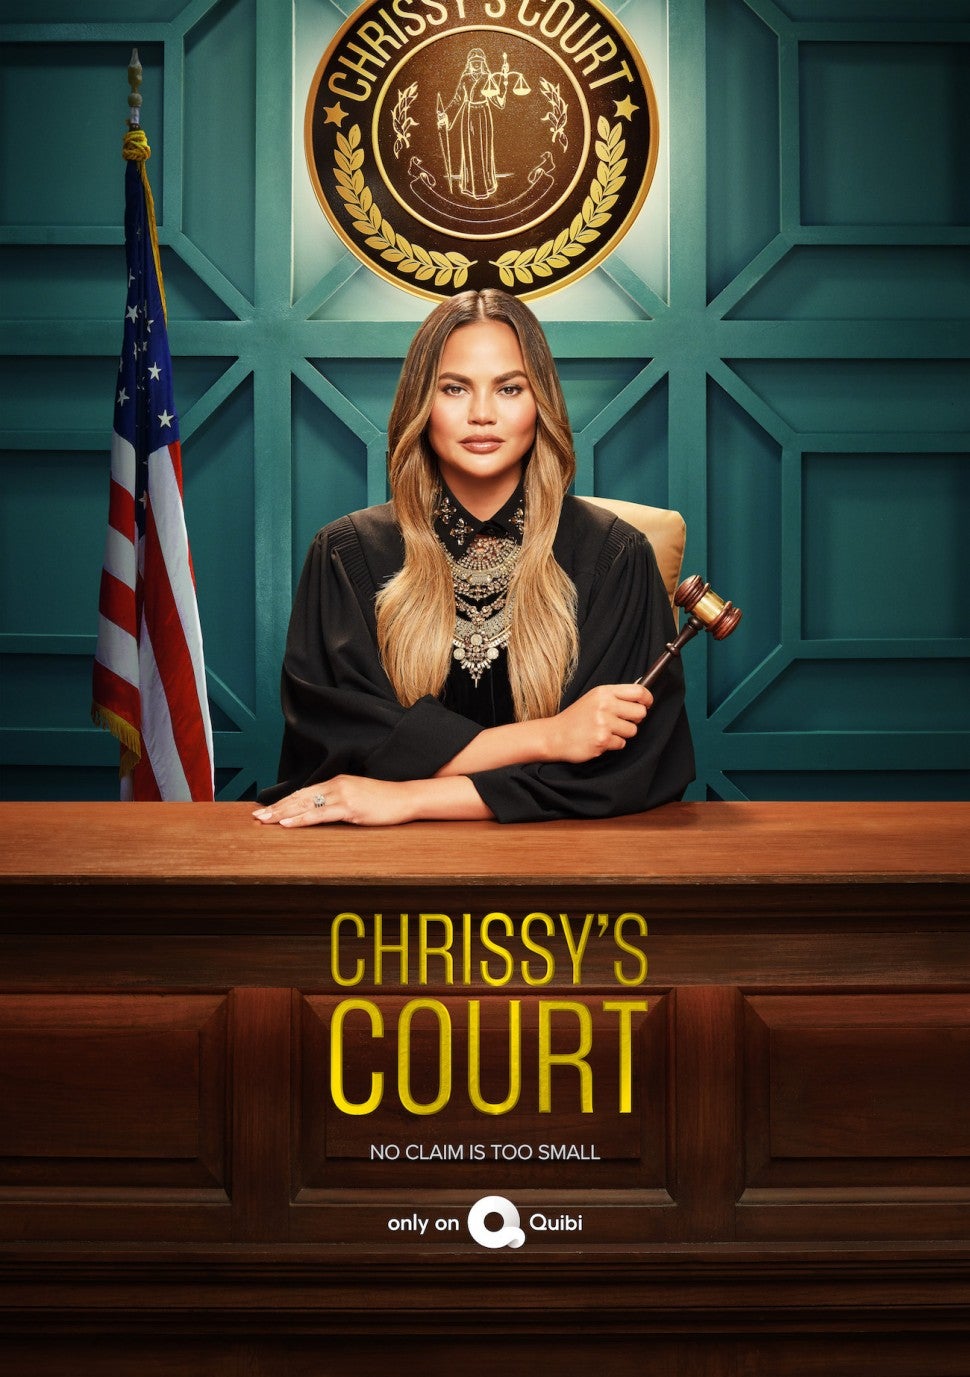 Chrissy's Court, Chrissy Teigen